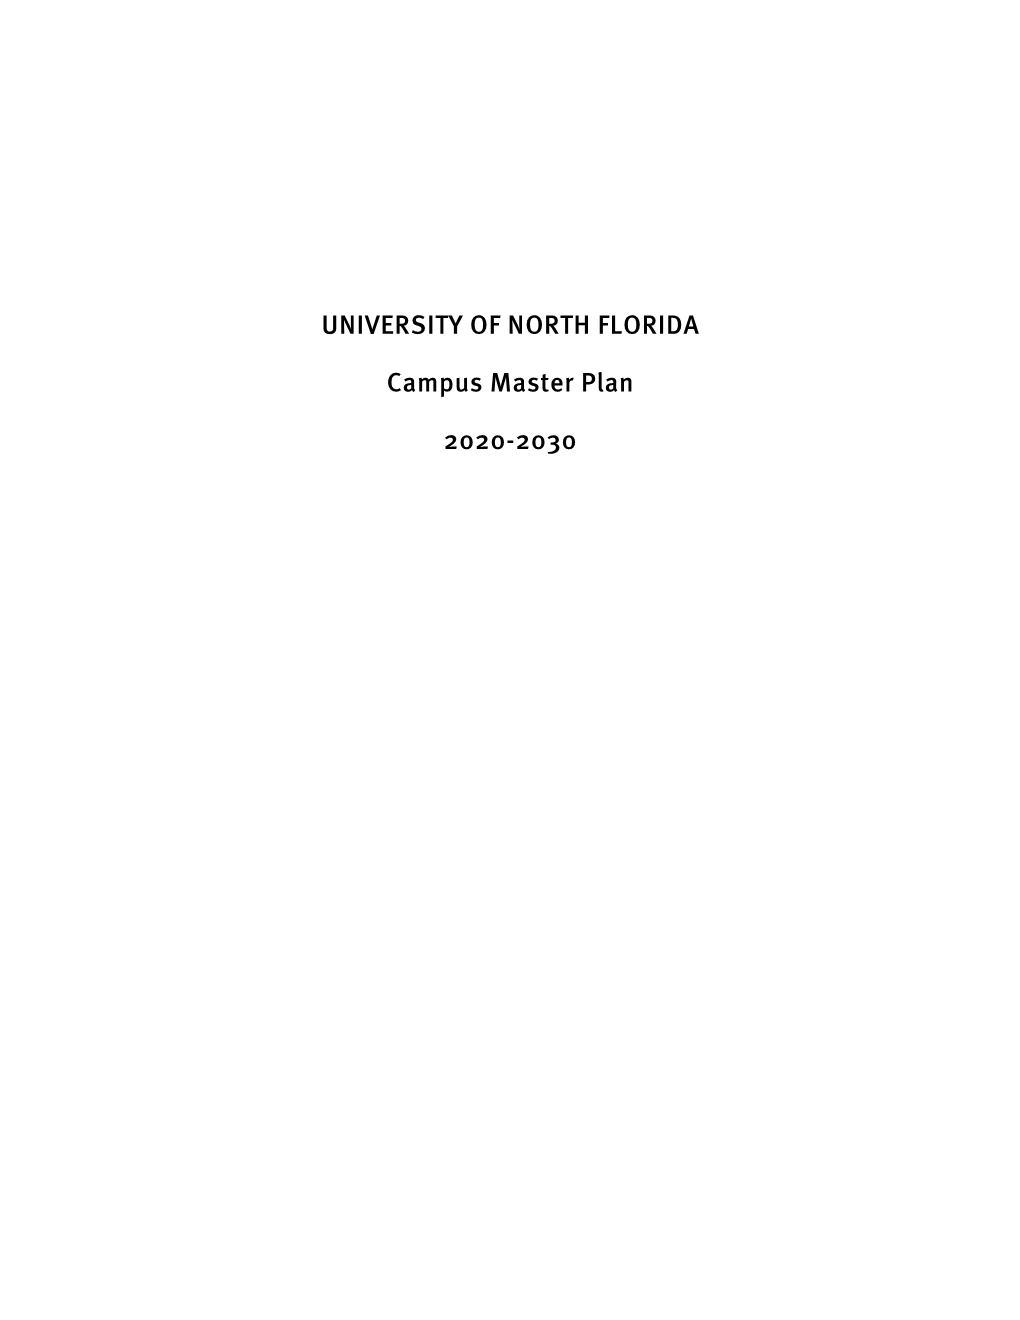 University of North Florida Campus Master Plan 2020-2030